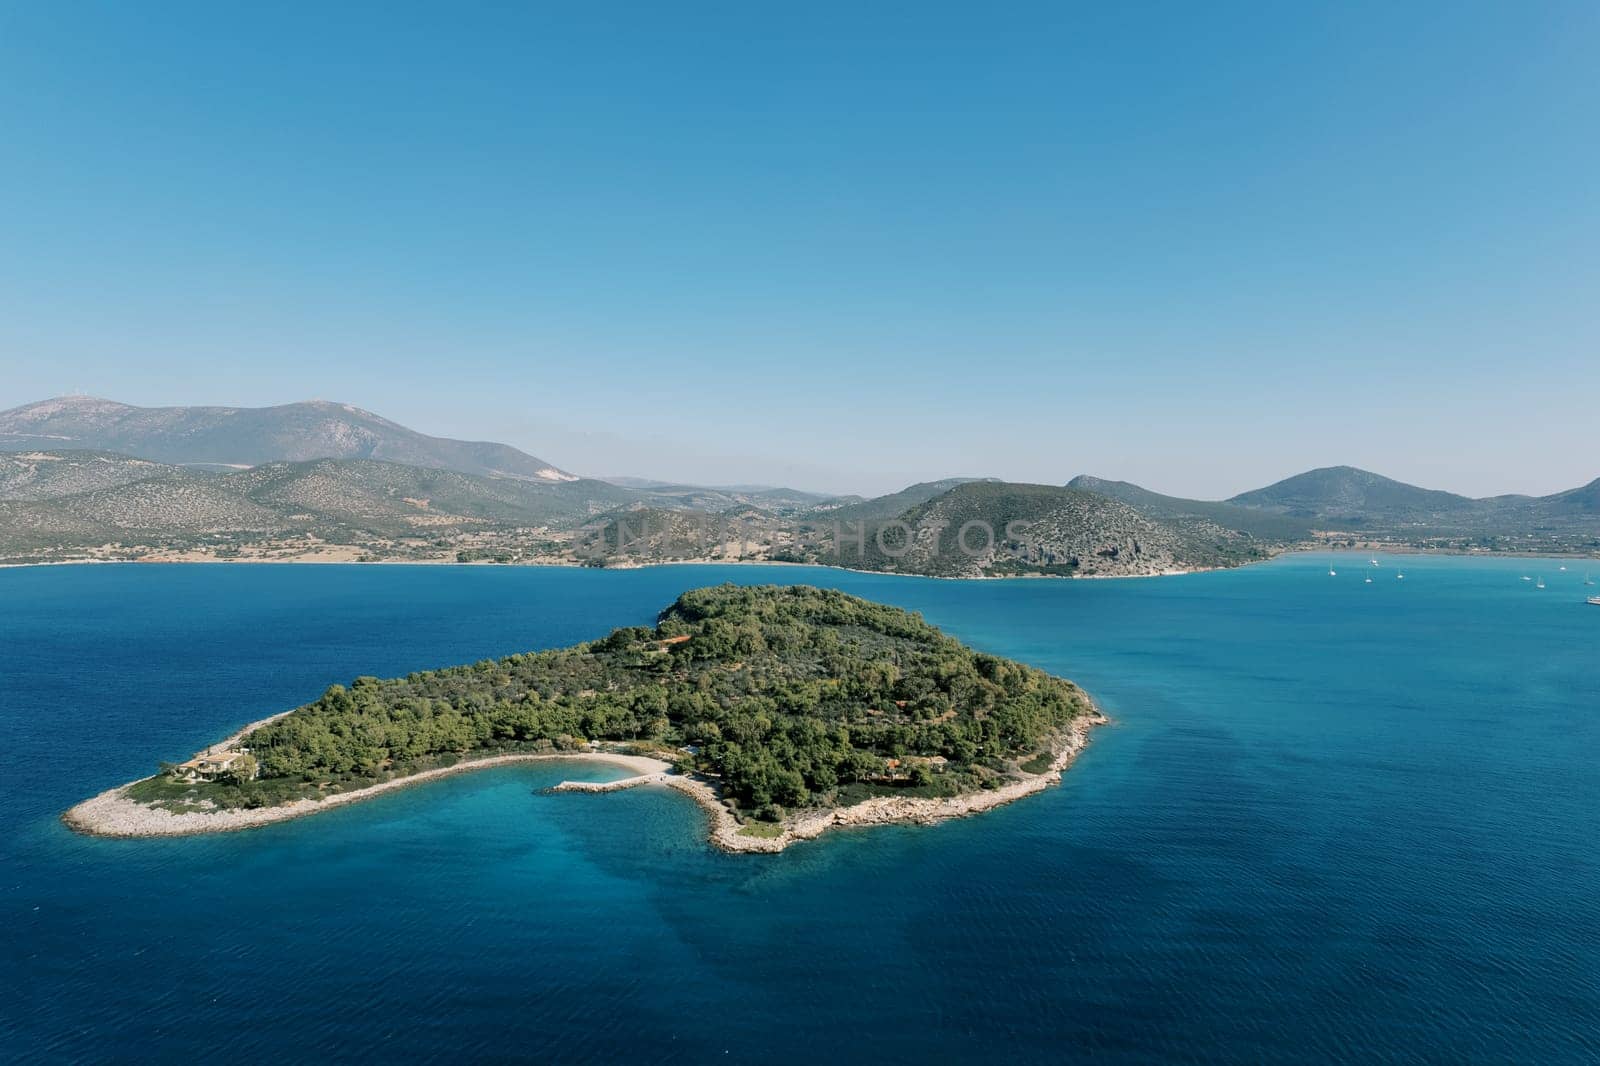 Koronida Argolis island in the Mediterranean Sea against the backdrop of mountains. Greece. High quality photo